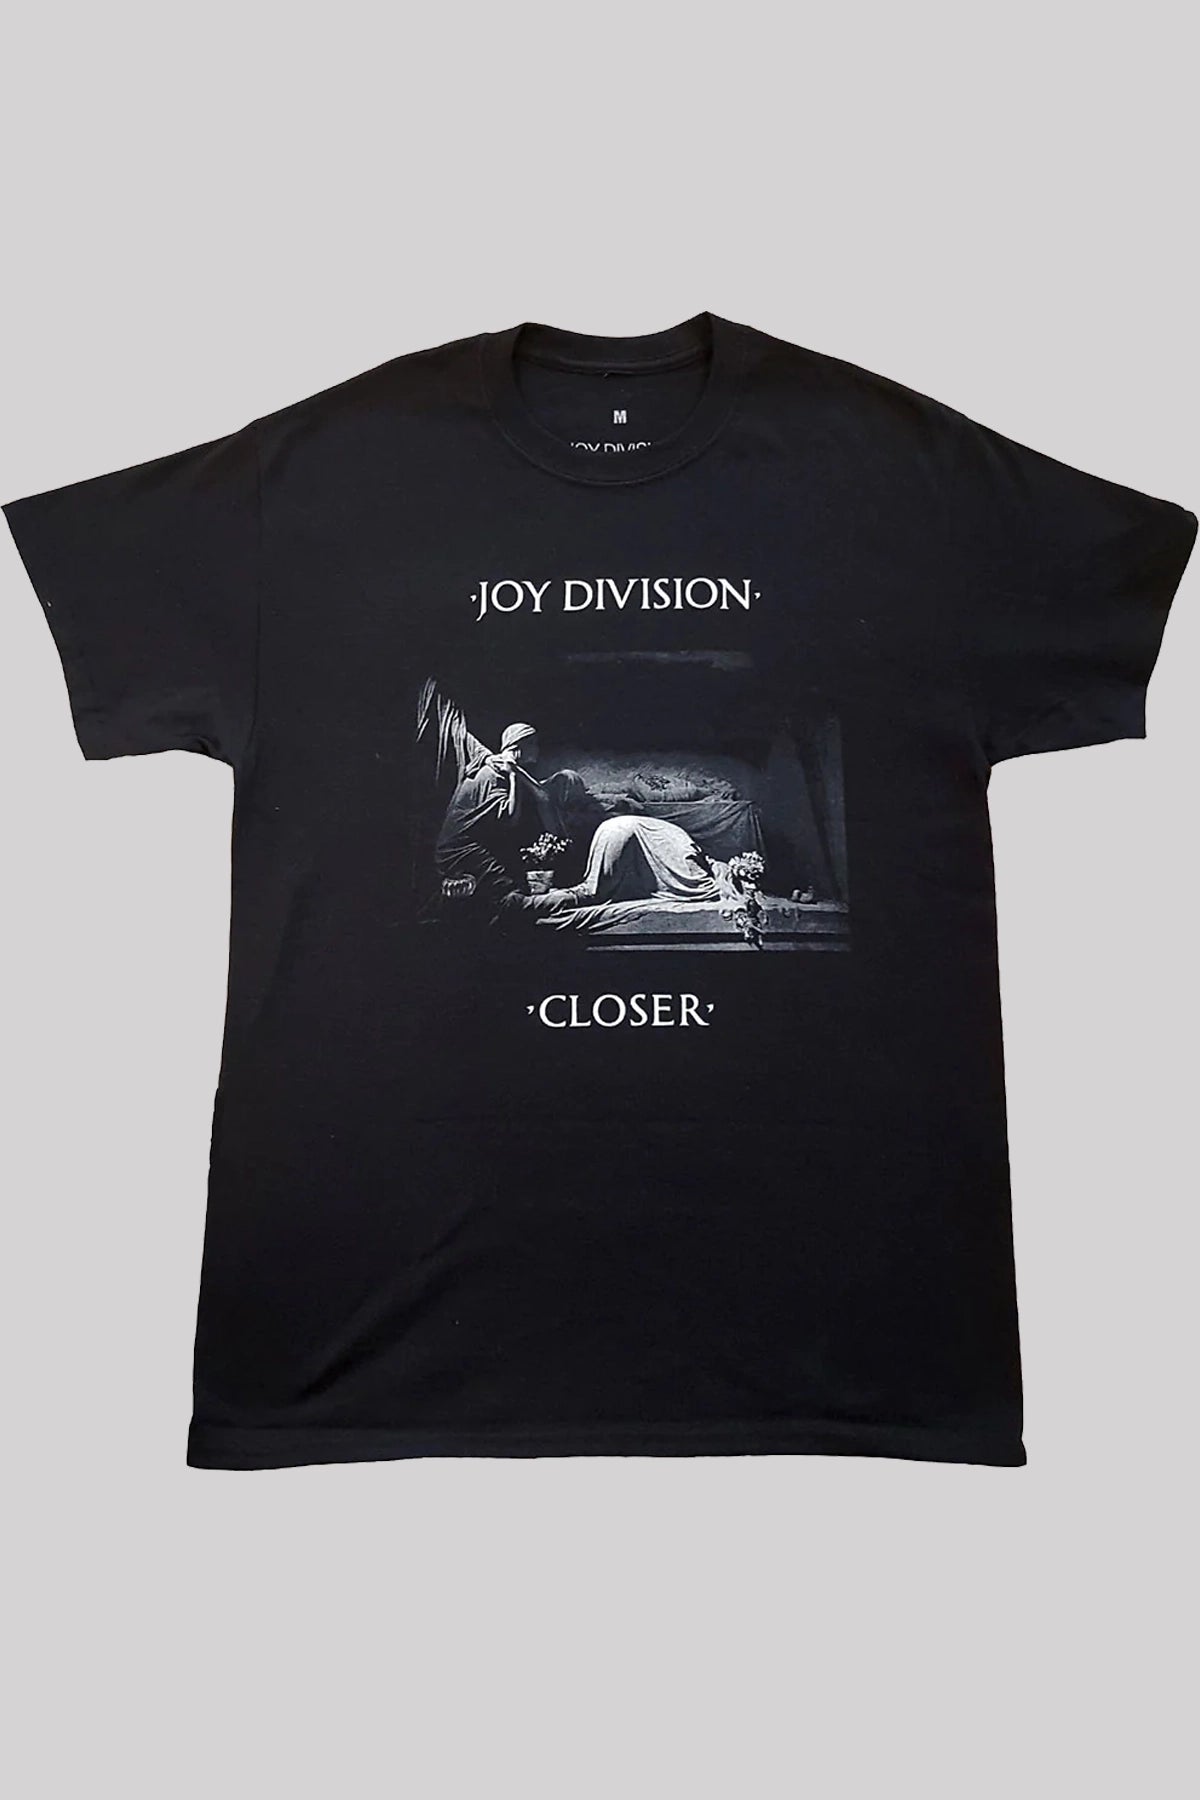 Joy Division Unisex T-Shirt, Classic Closer